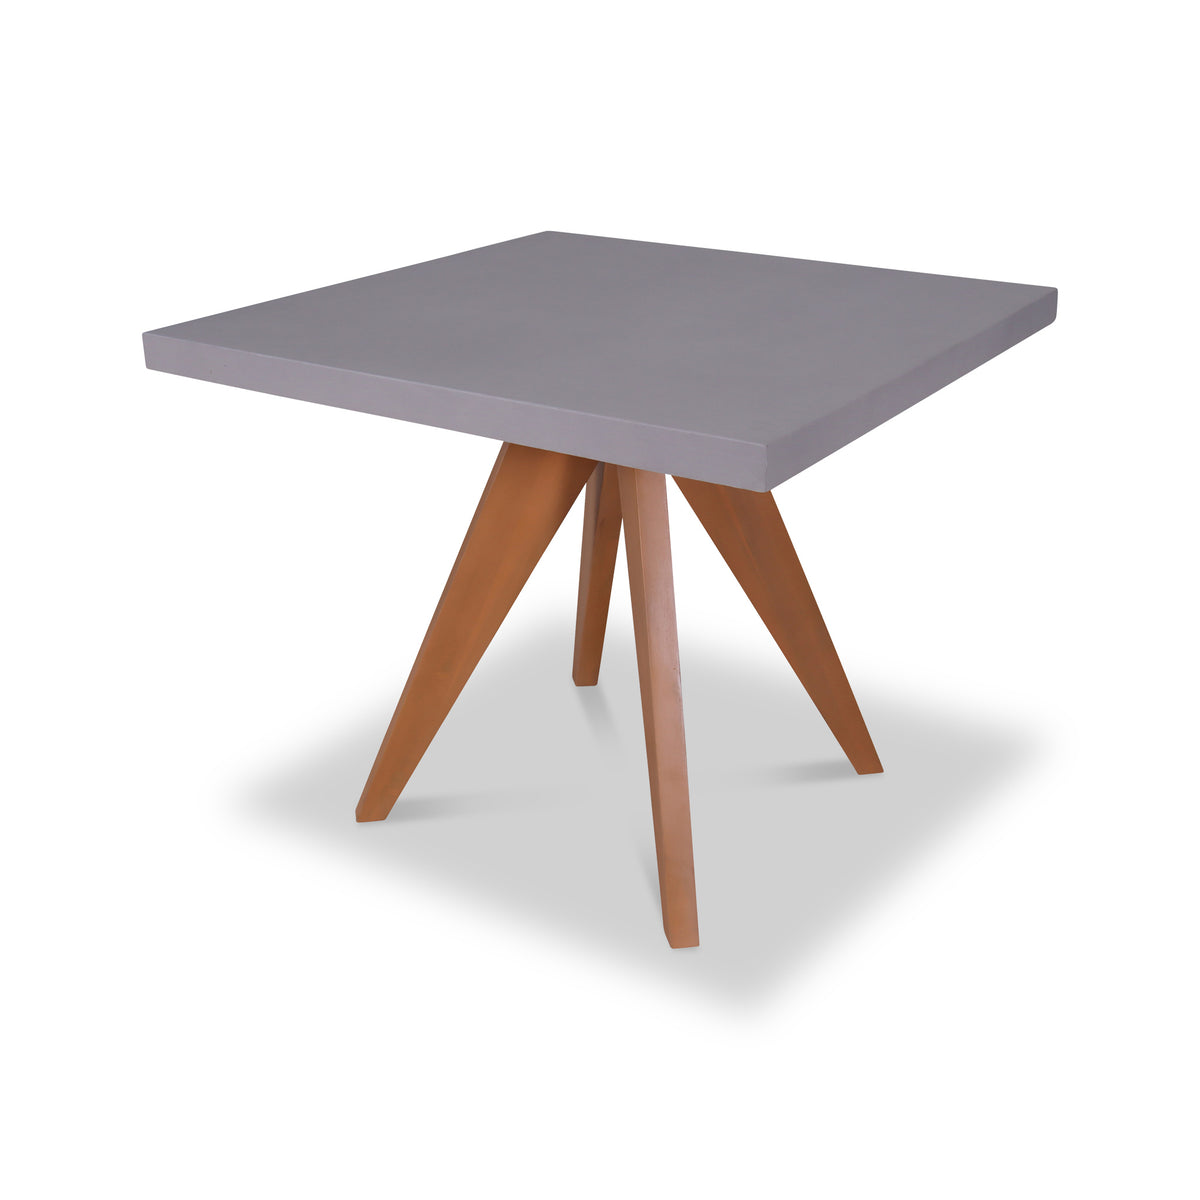 Luna 90cm Square Concrete Table from Roseland Furniture